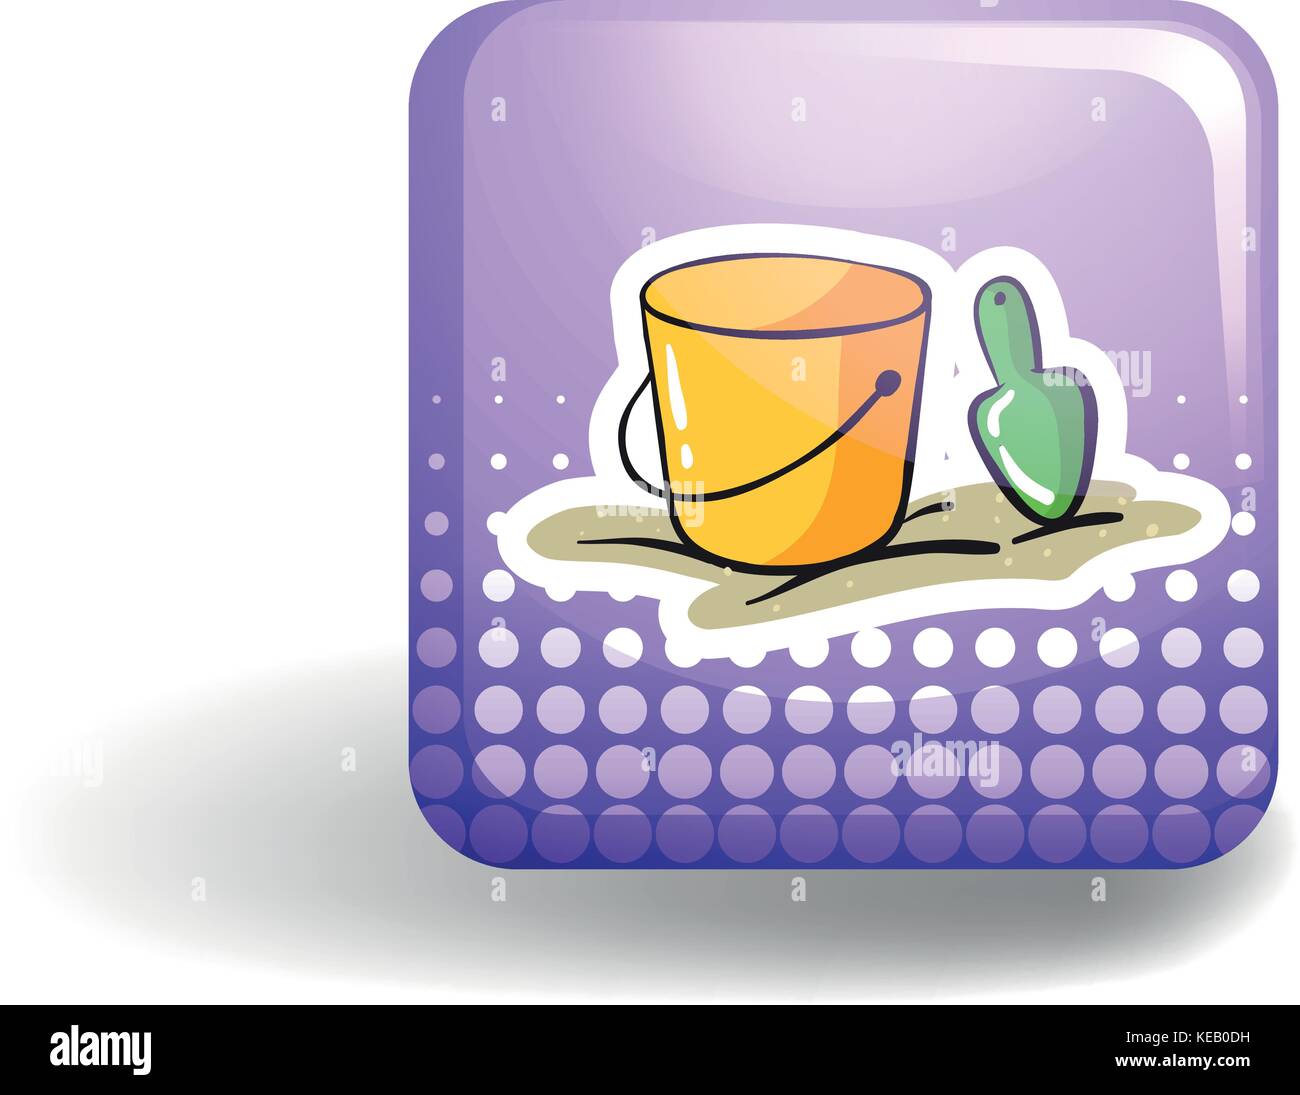 Yellow bucket and spoon on purple icon Stock Vector